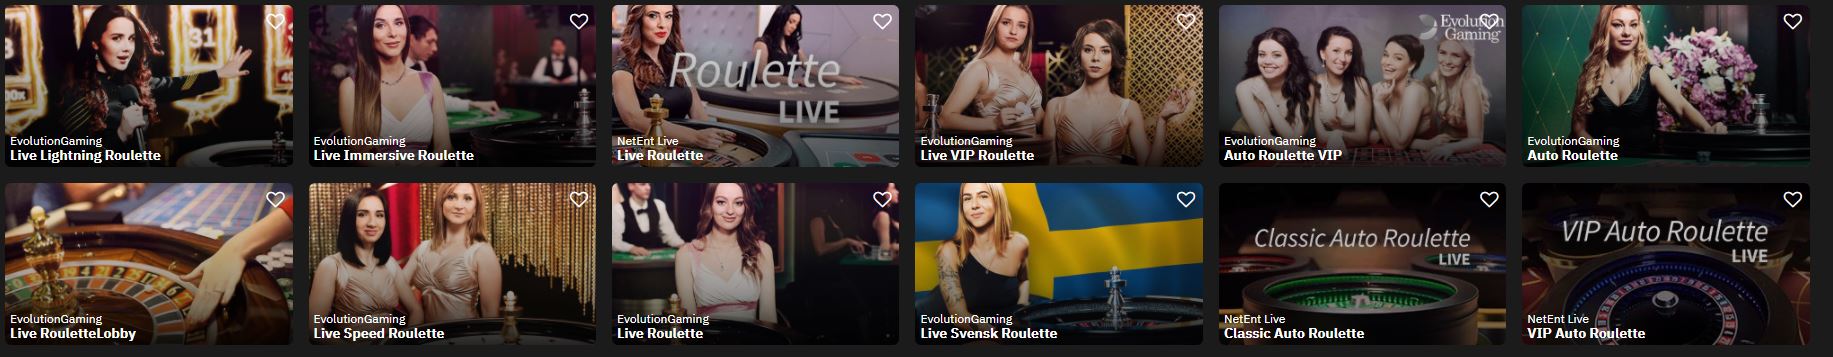 Fastbet Live Roulette screenshot